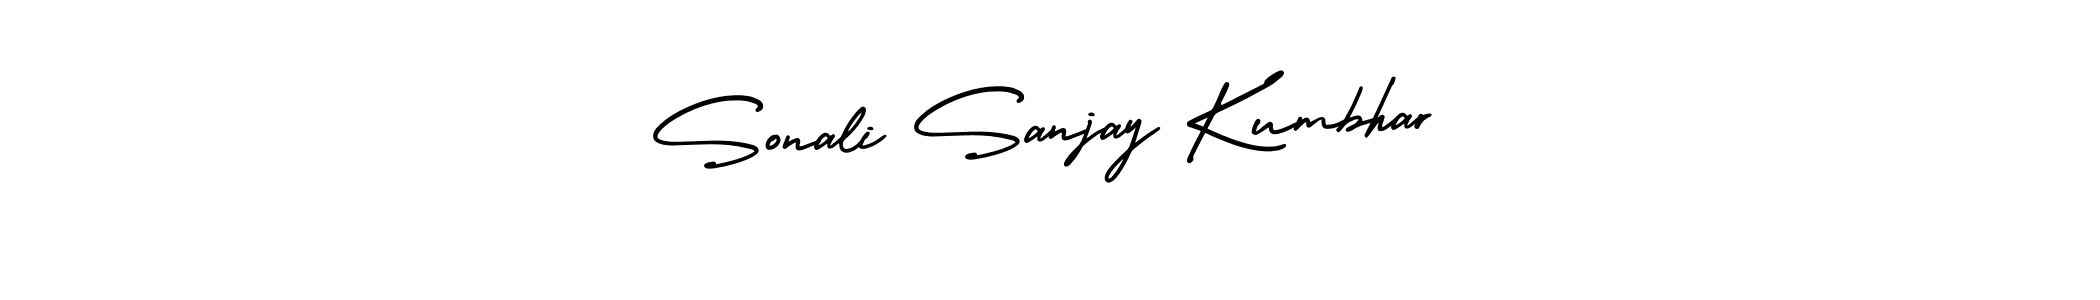 Best and Professional Signature Style for Sonali Sanjay Kumbhar. AmerikaSignatureDemo-Regular Best Signature Style Collection. Sonali Sanjay Kumbhar signature style 3 images and pictures png